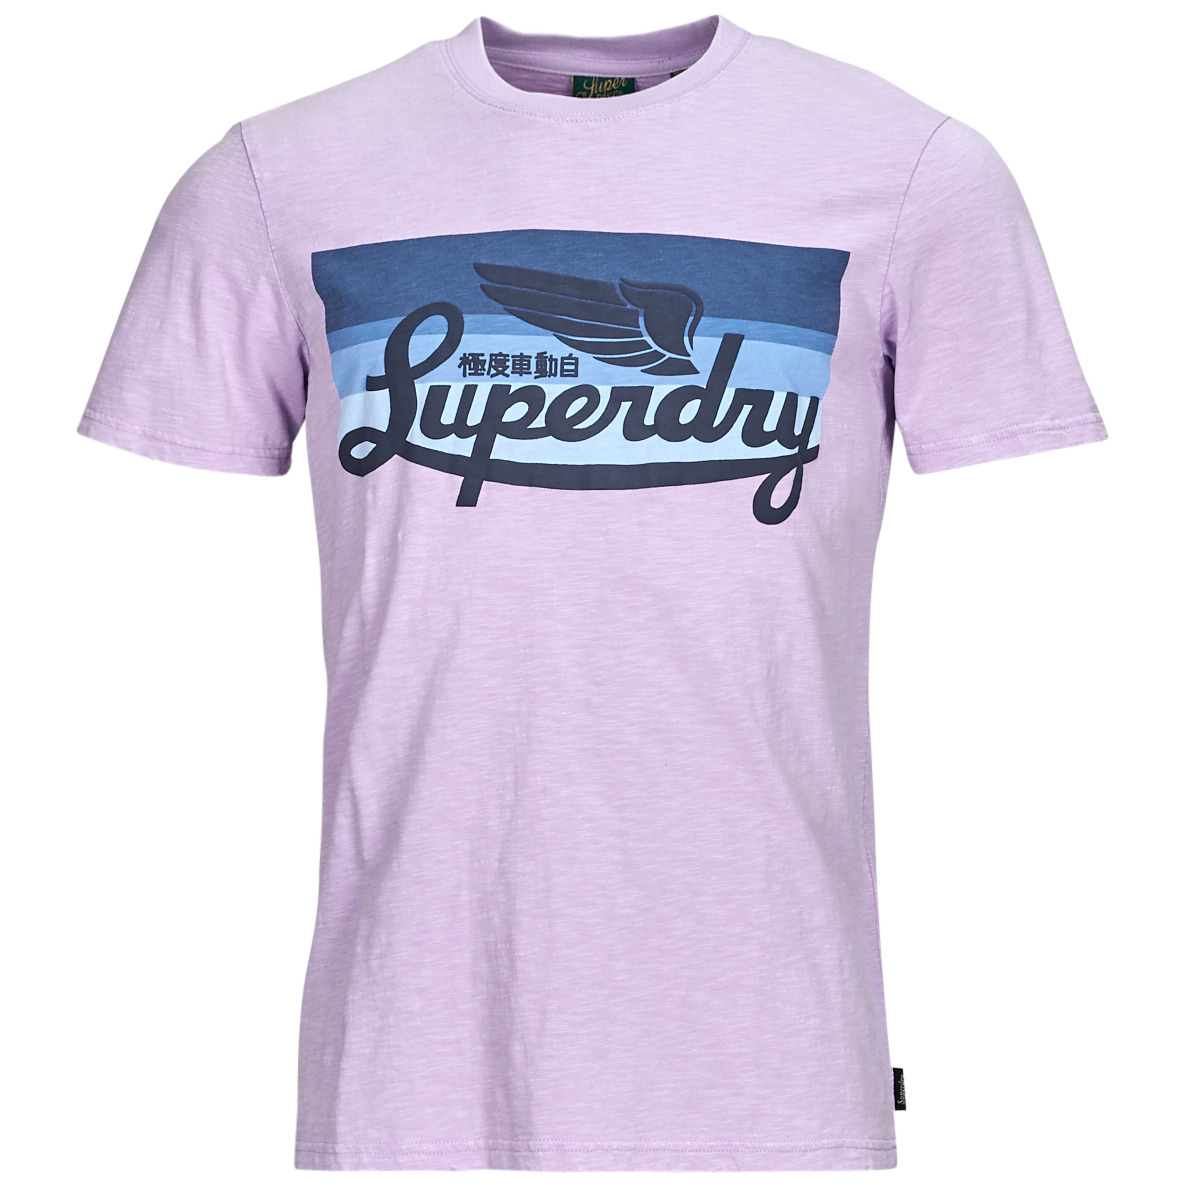 textil Herr T-shirts Superdry CALI STRIPED LOGO T SHIRT Violett